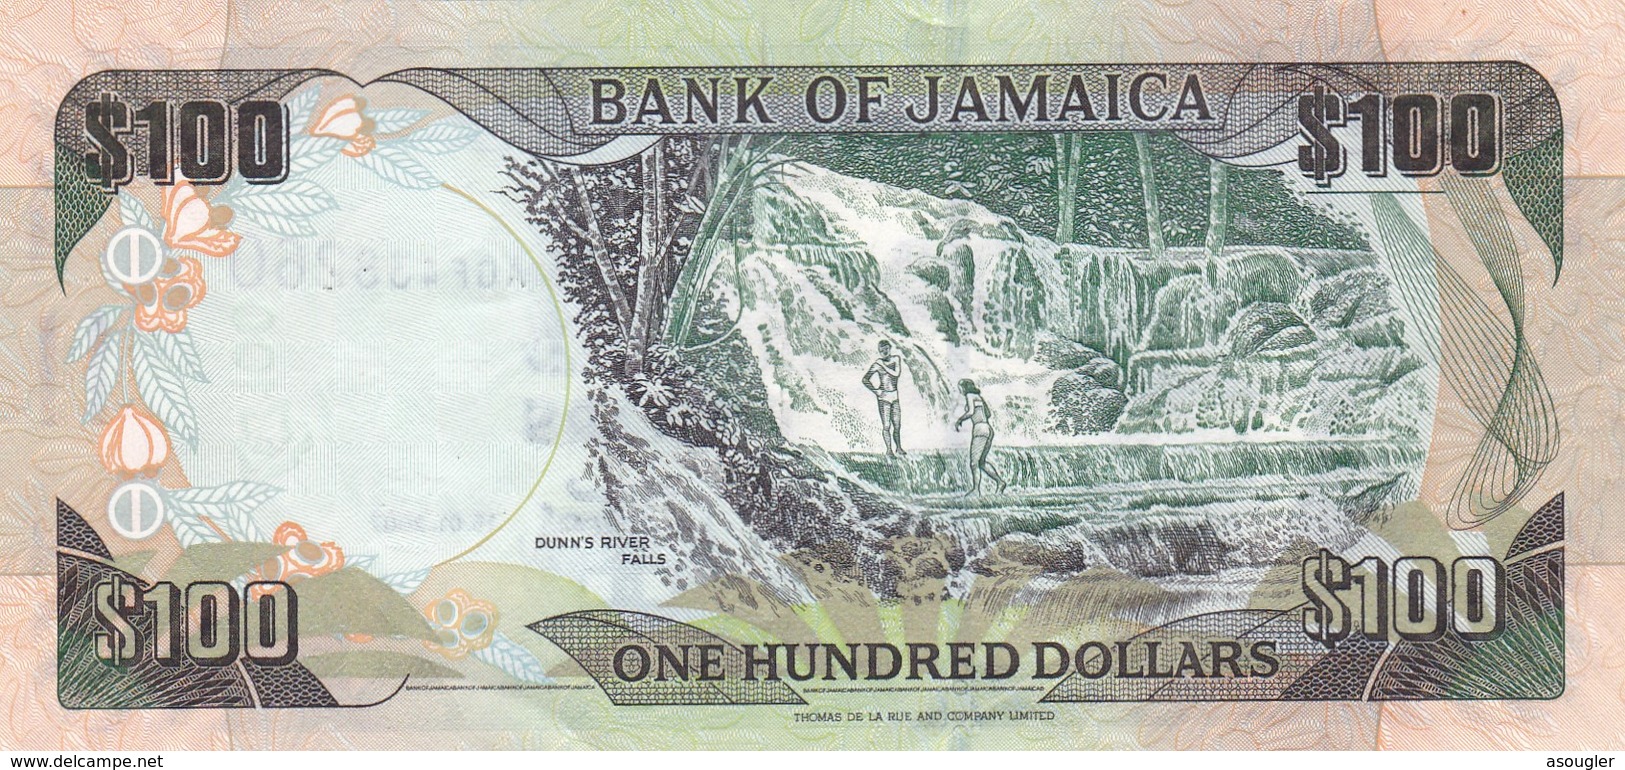 Jamaica 100 Dollars 2007 VF (free Shipping Via Regular Air Mail - Buyer Risk) - Jamaica